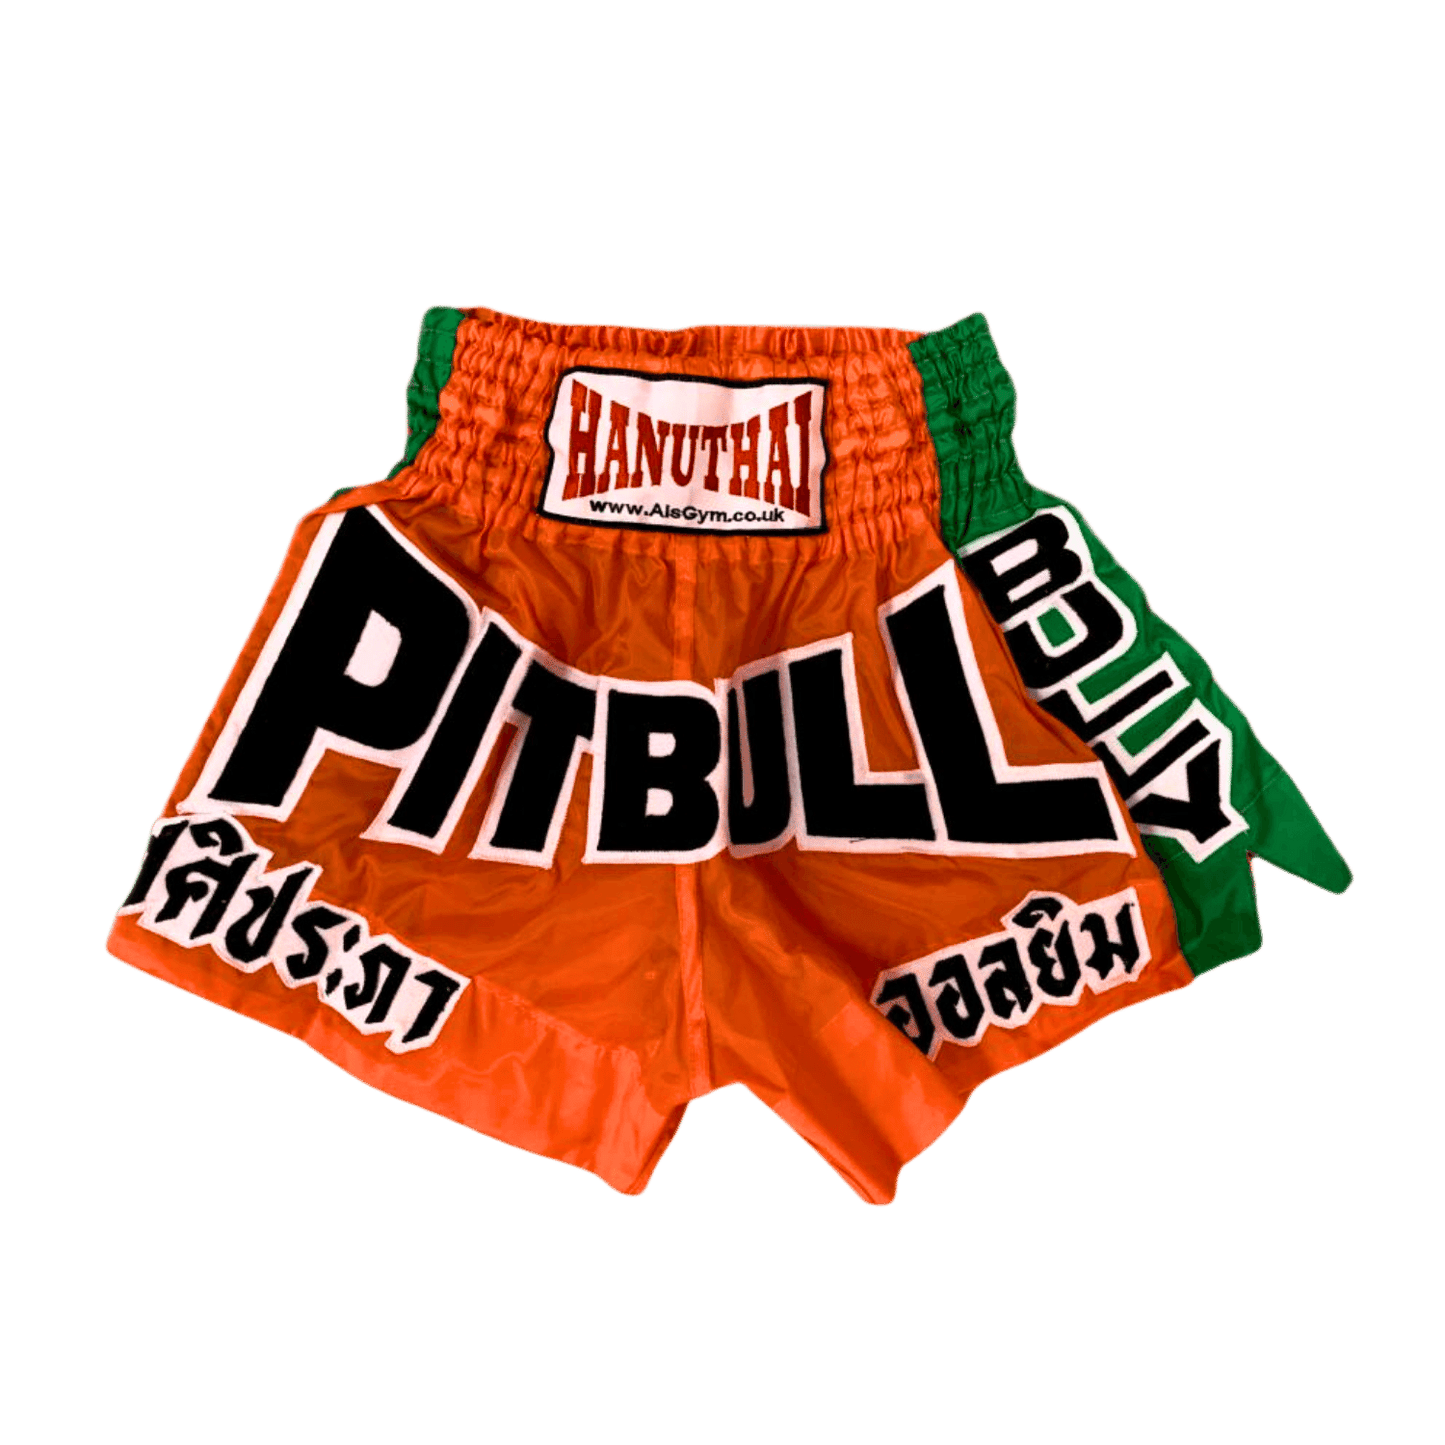 Handmade high-quality Pitbull Muay Thai boxing shorts from Bangkok, by Hanuthai.